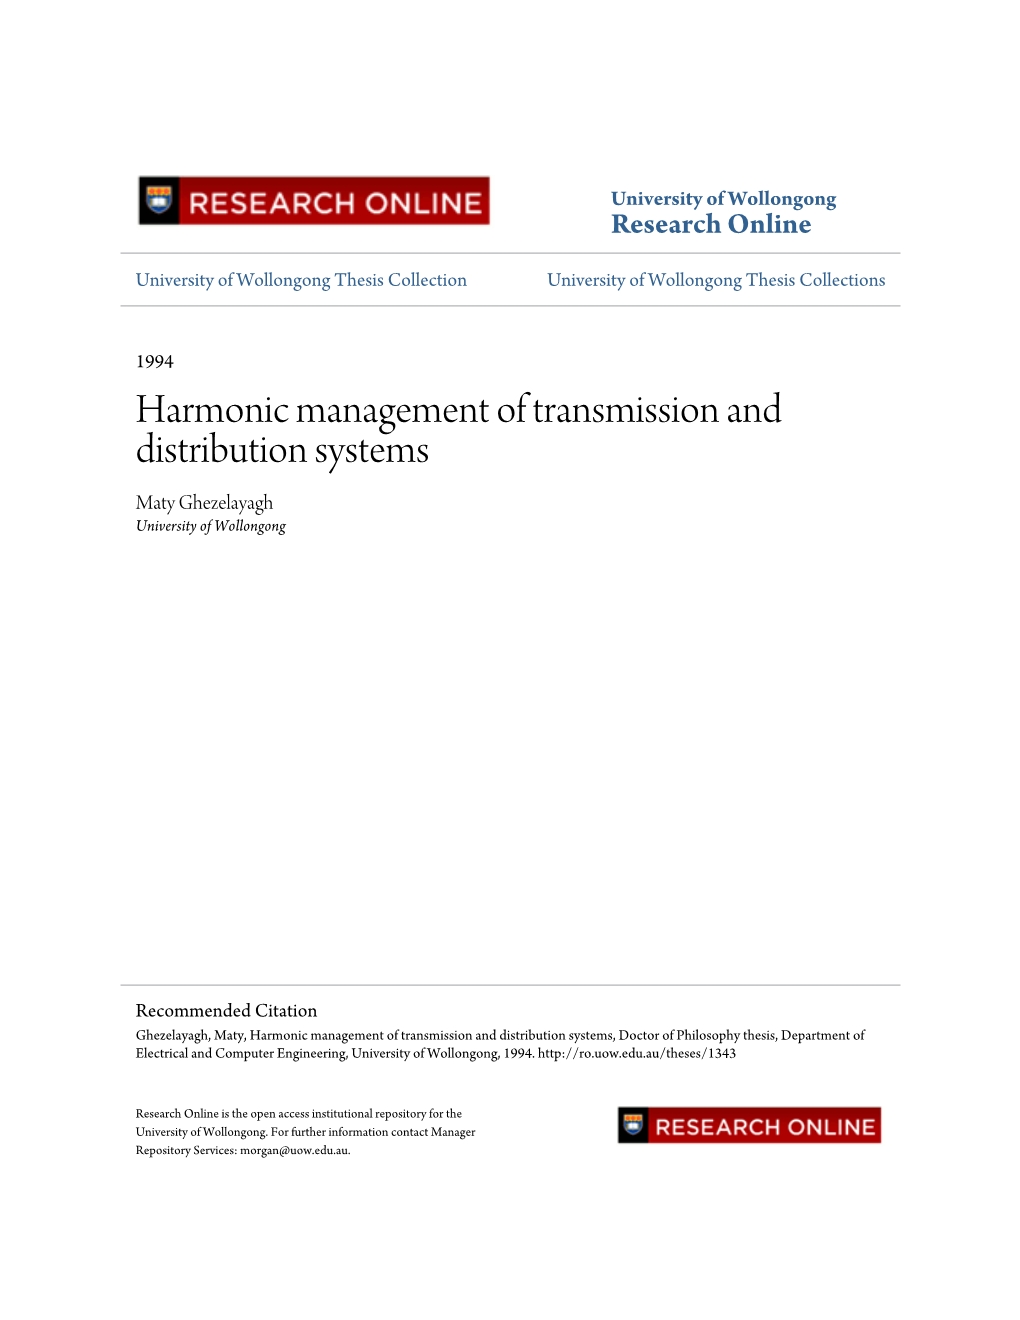 Harmonic Management of Transmission and Distribution Systems Maty Ghezelayagh University of Wollongong